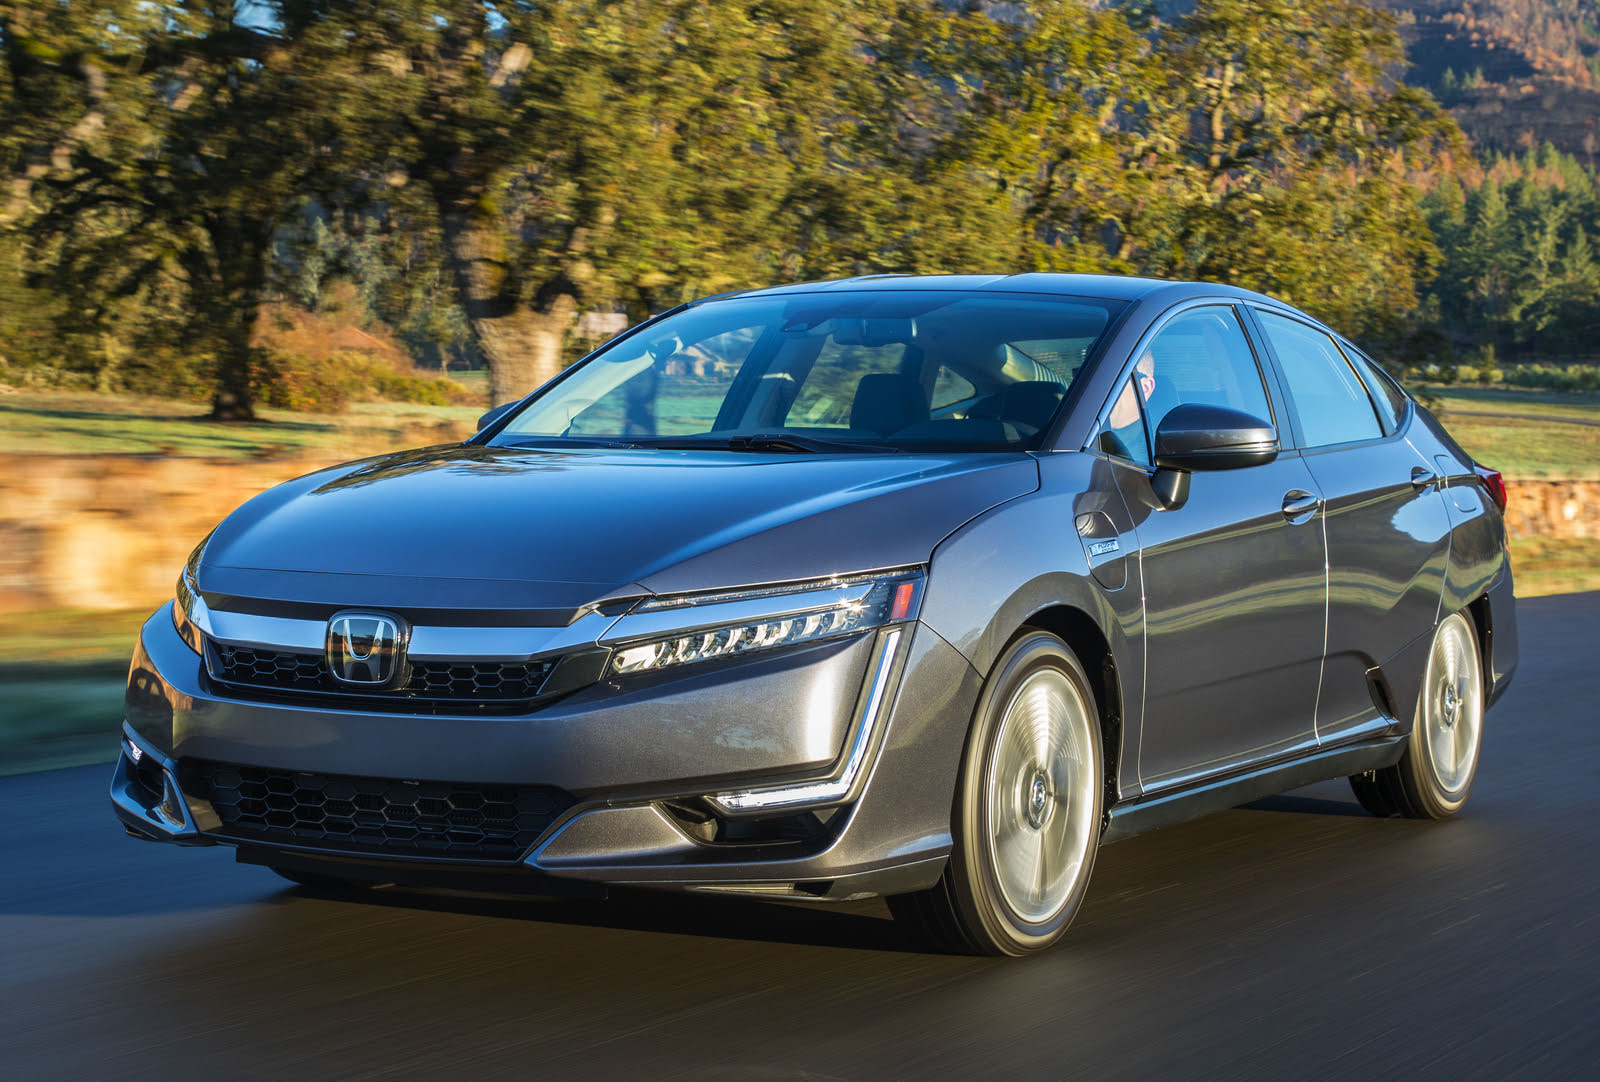 Honda Clarity Hybrid Plug-In Test Drive Review - CarGurus